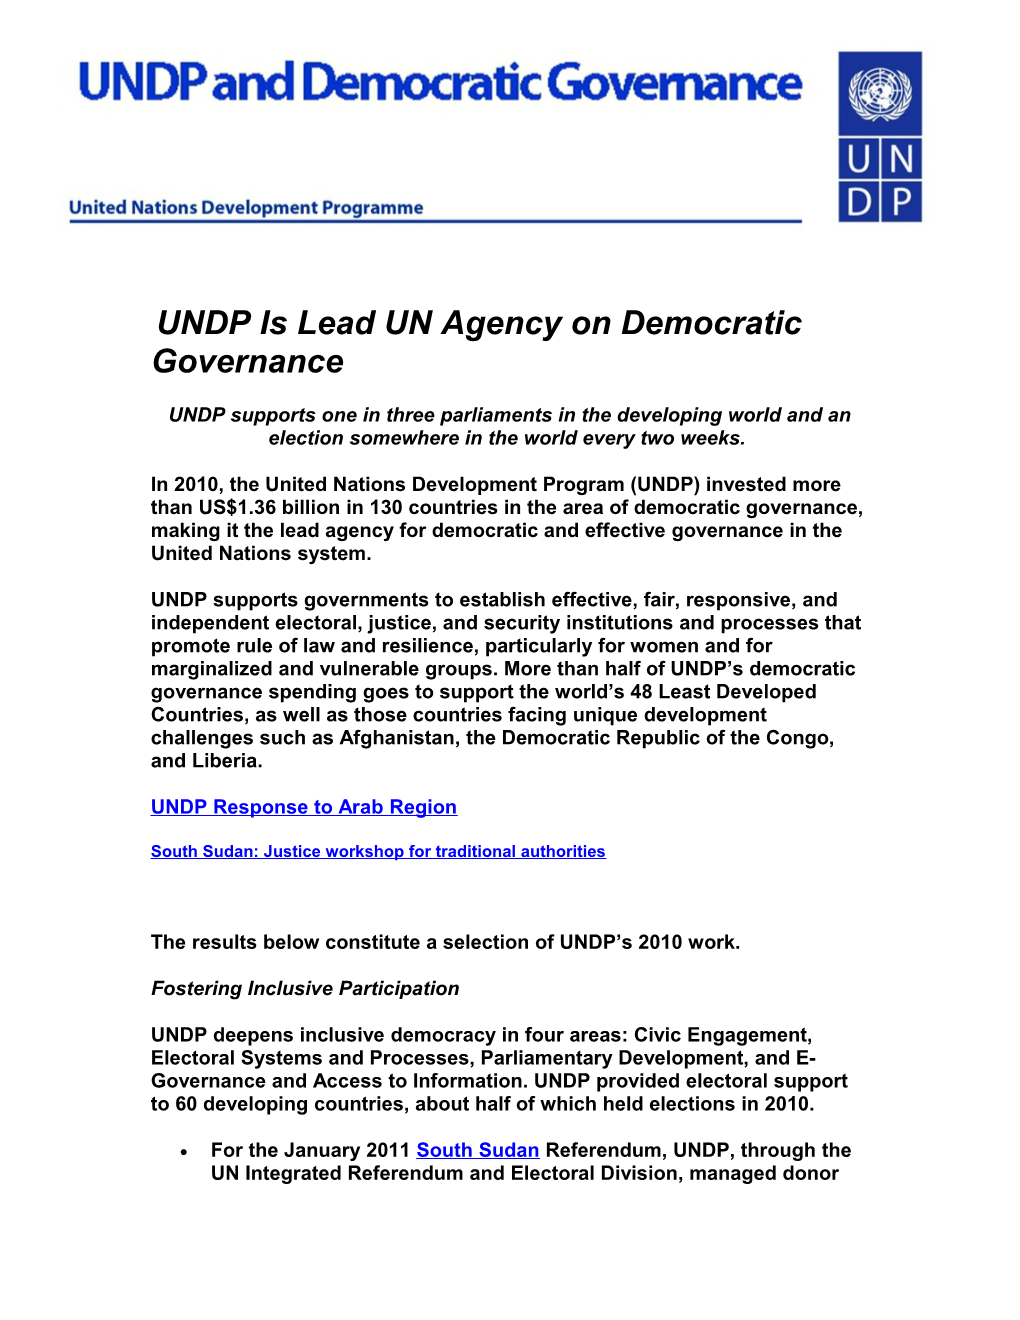 UNDP Is Lead UN Agency on Democratic Governance